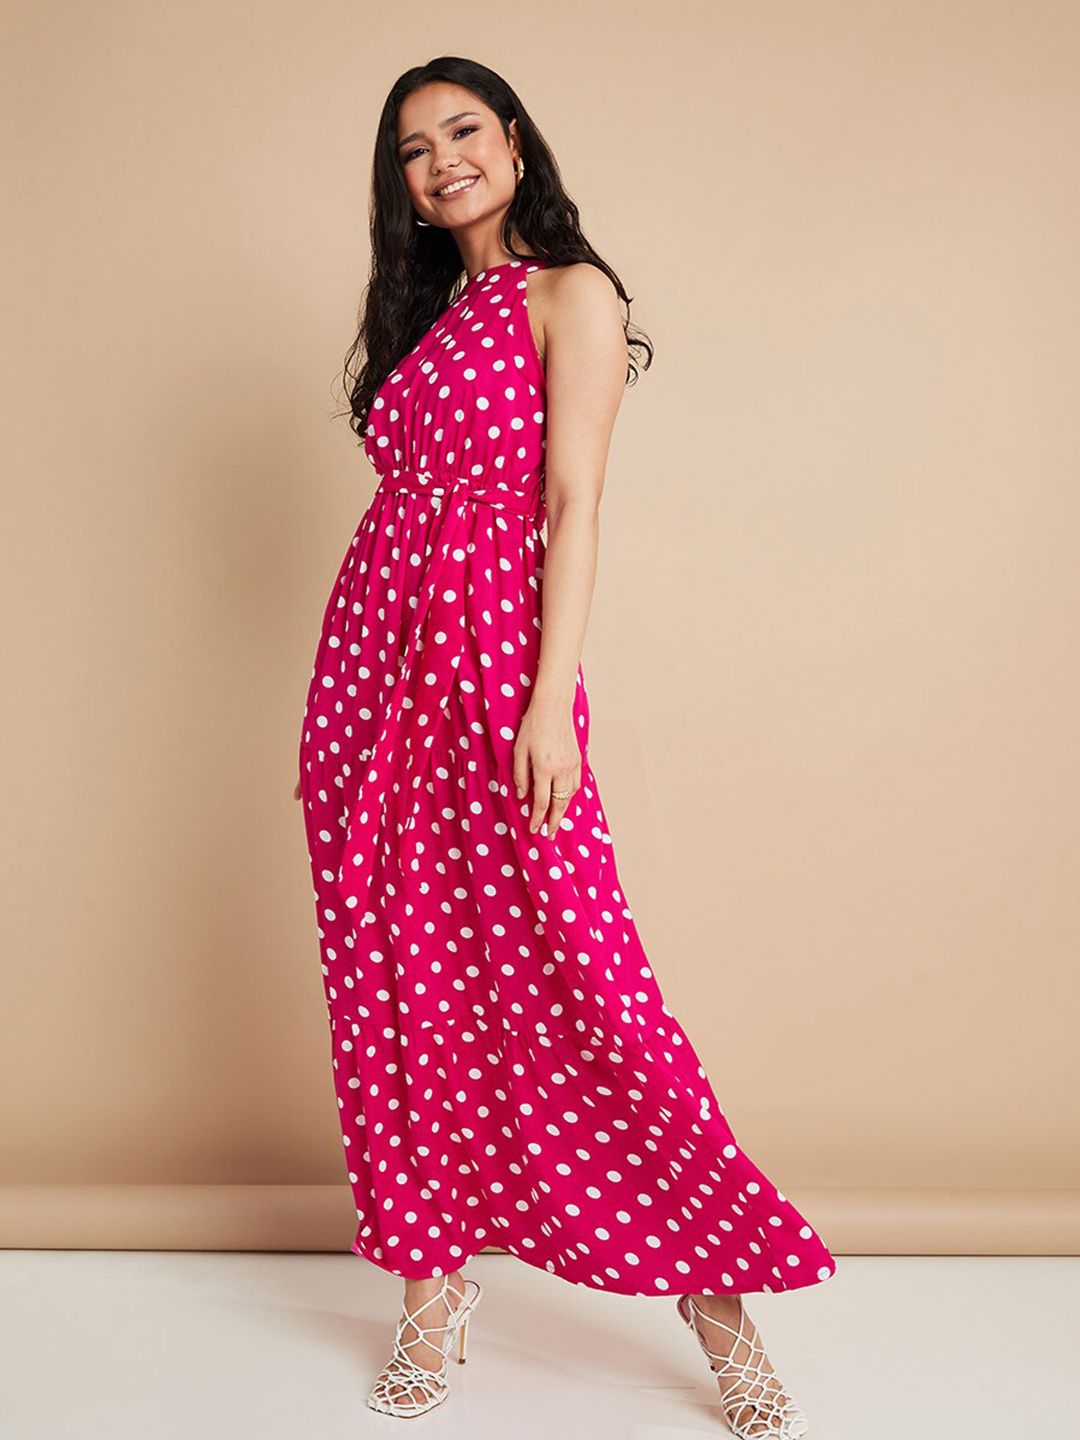 Styli Pink Peplum Dress Price in India